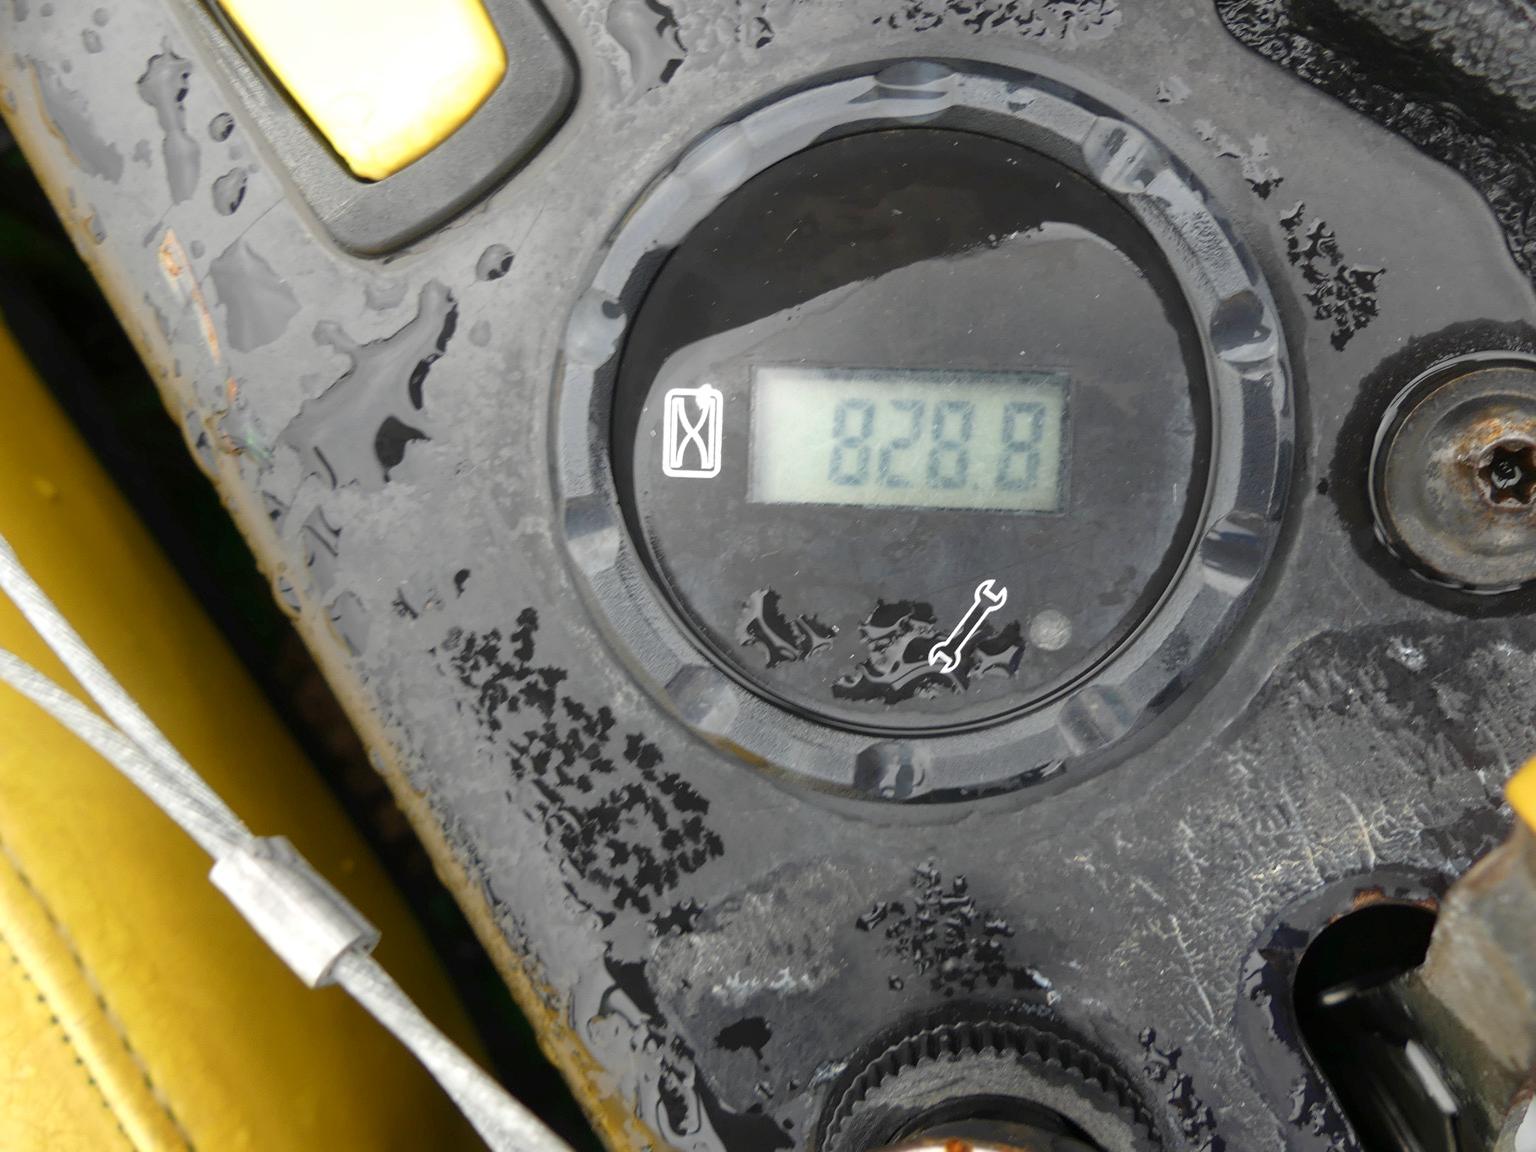 John Deere Z915B Zero-turn Mower, s/n 040185: Meter Shows 240 hrs